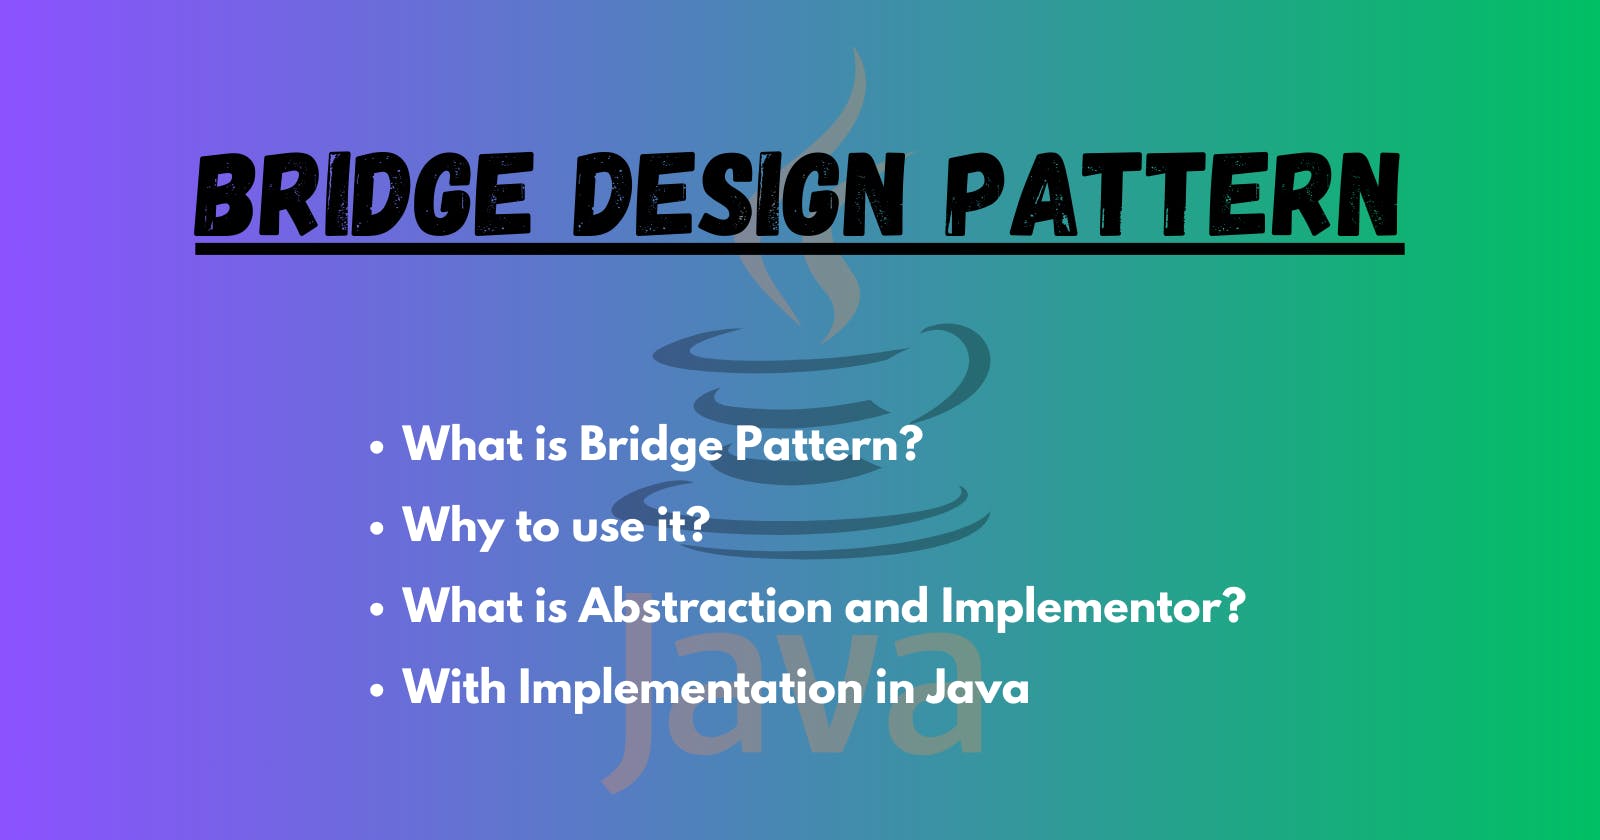 A Guide to Bridge Design Pattern